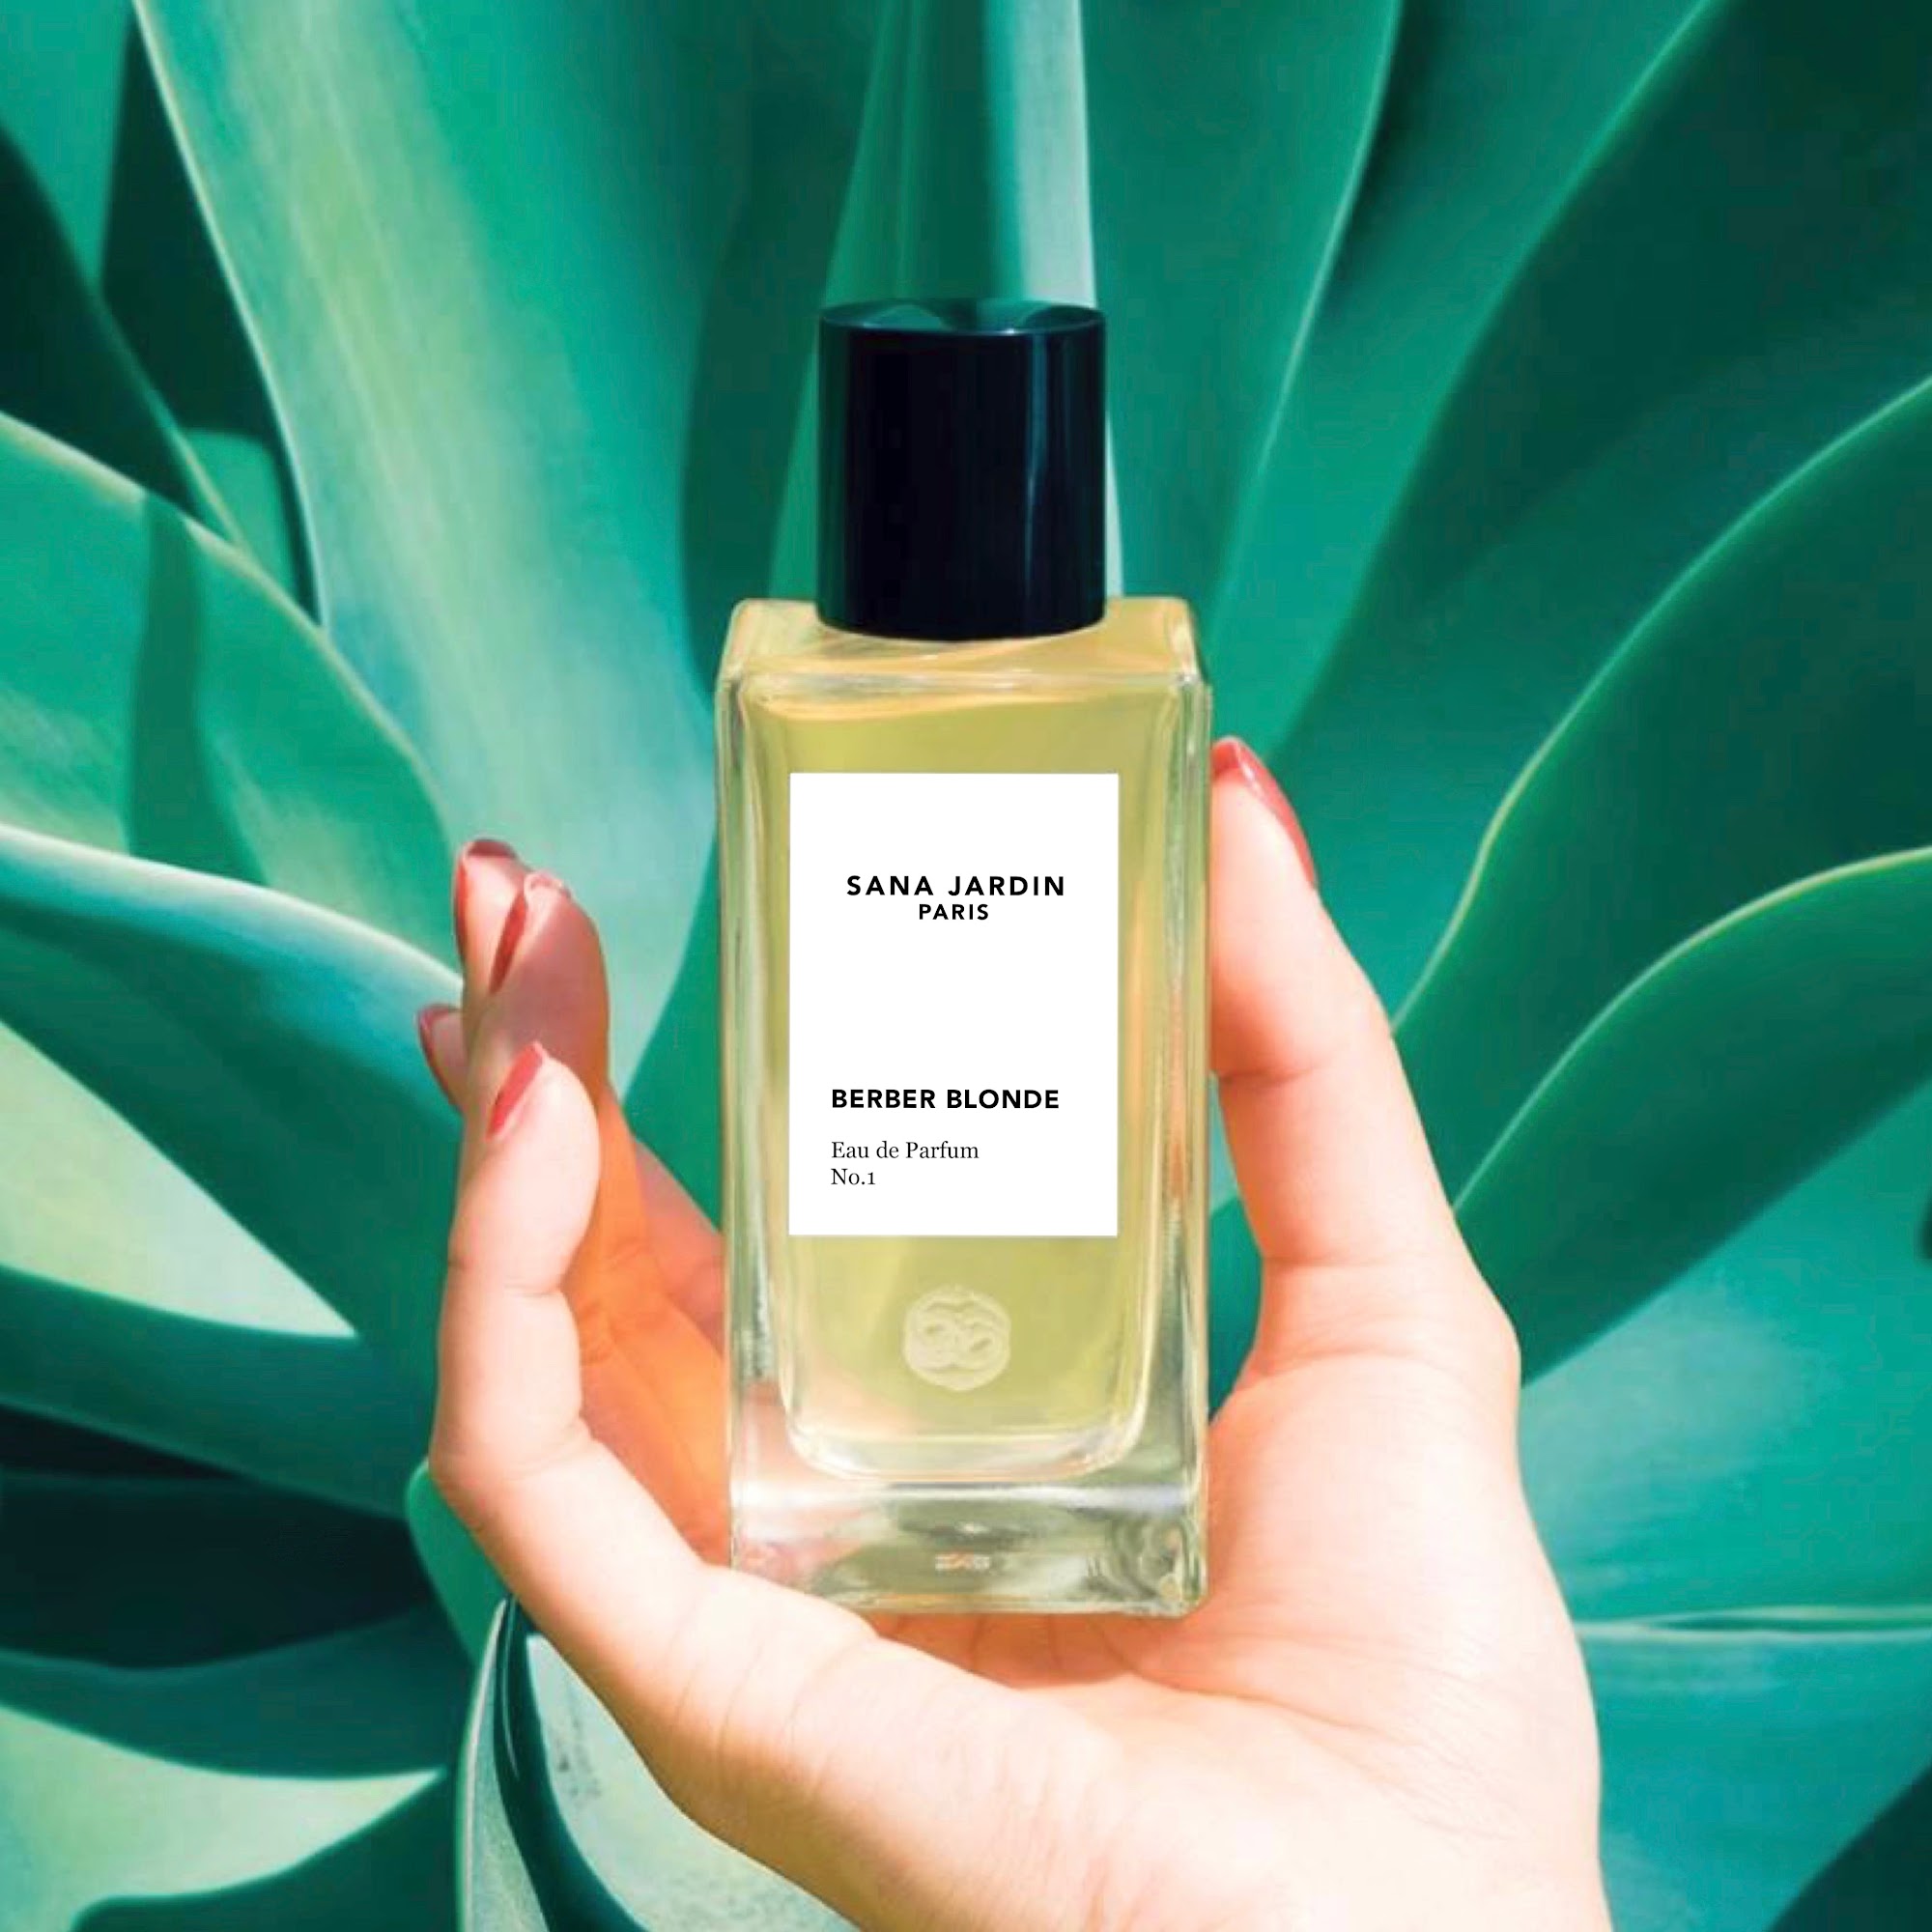 An advert for the perfume Berber Blonde by Sana Jardin